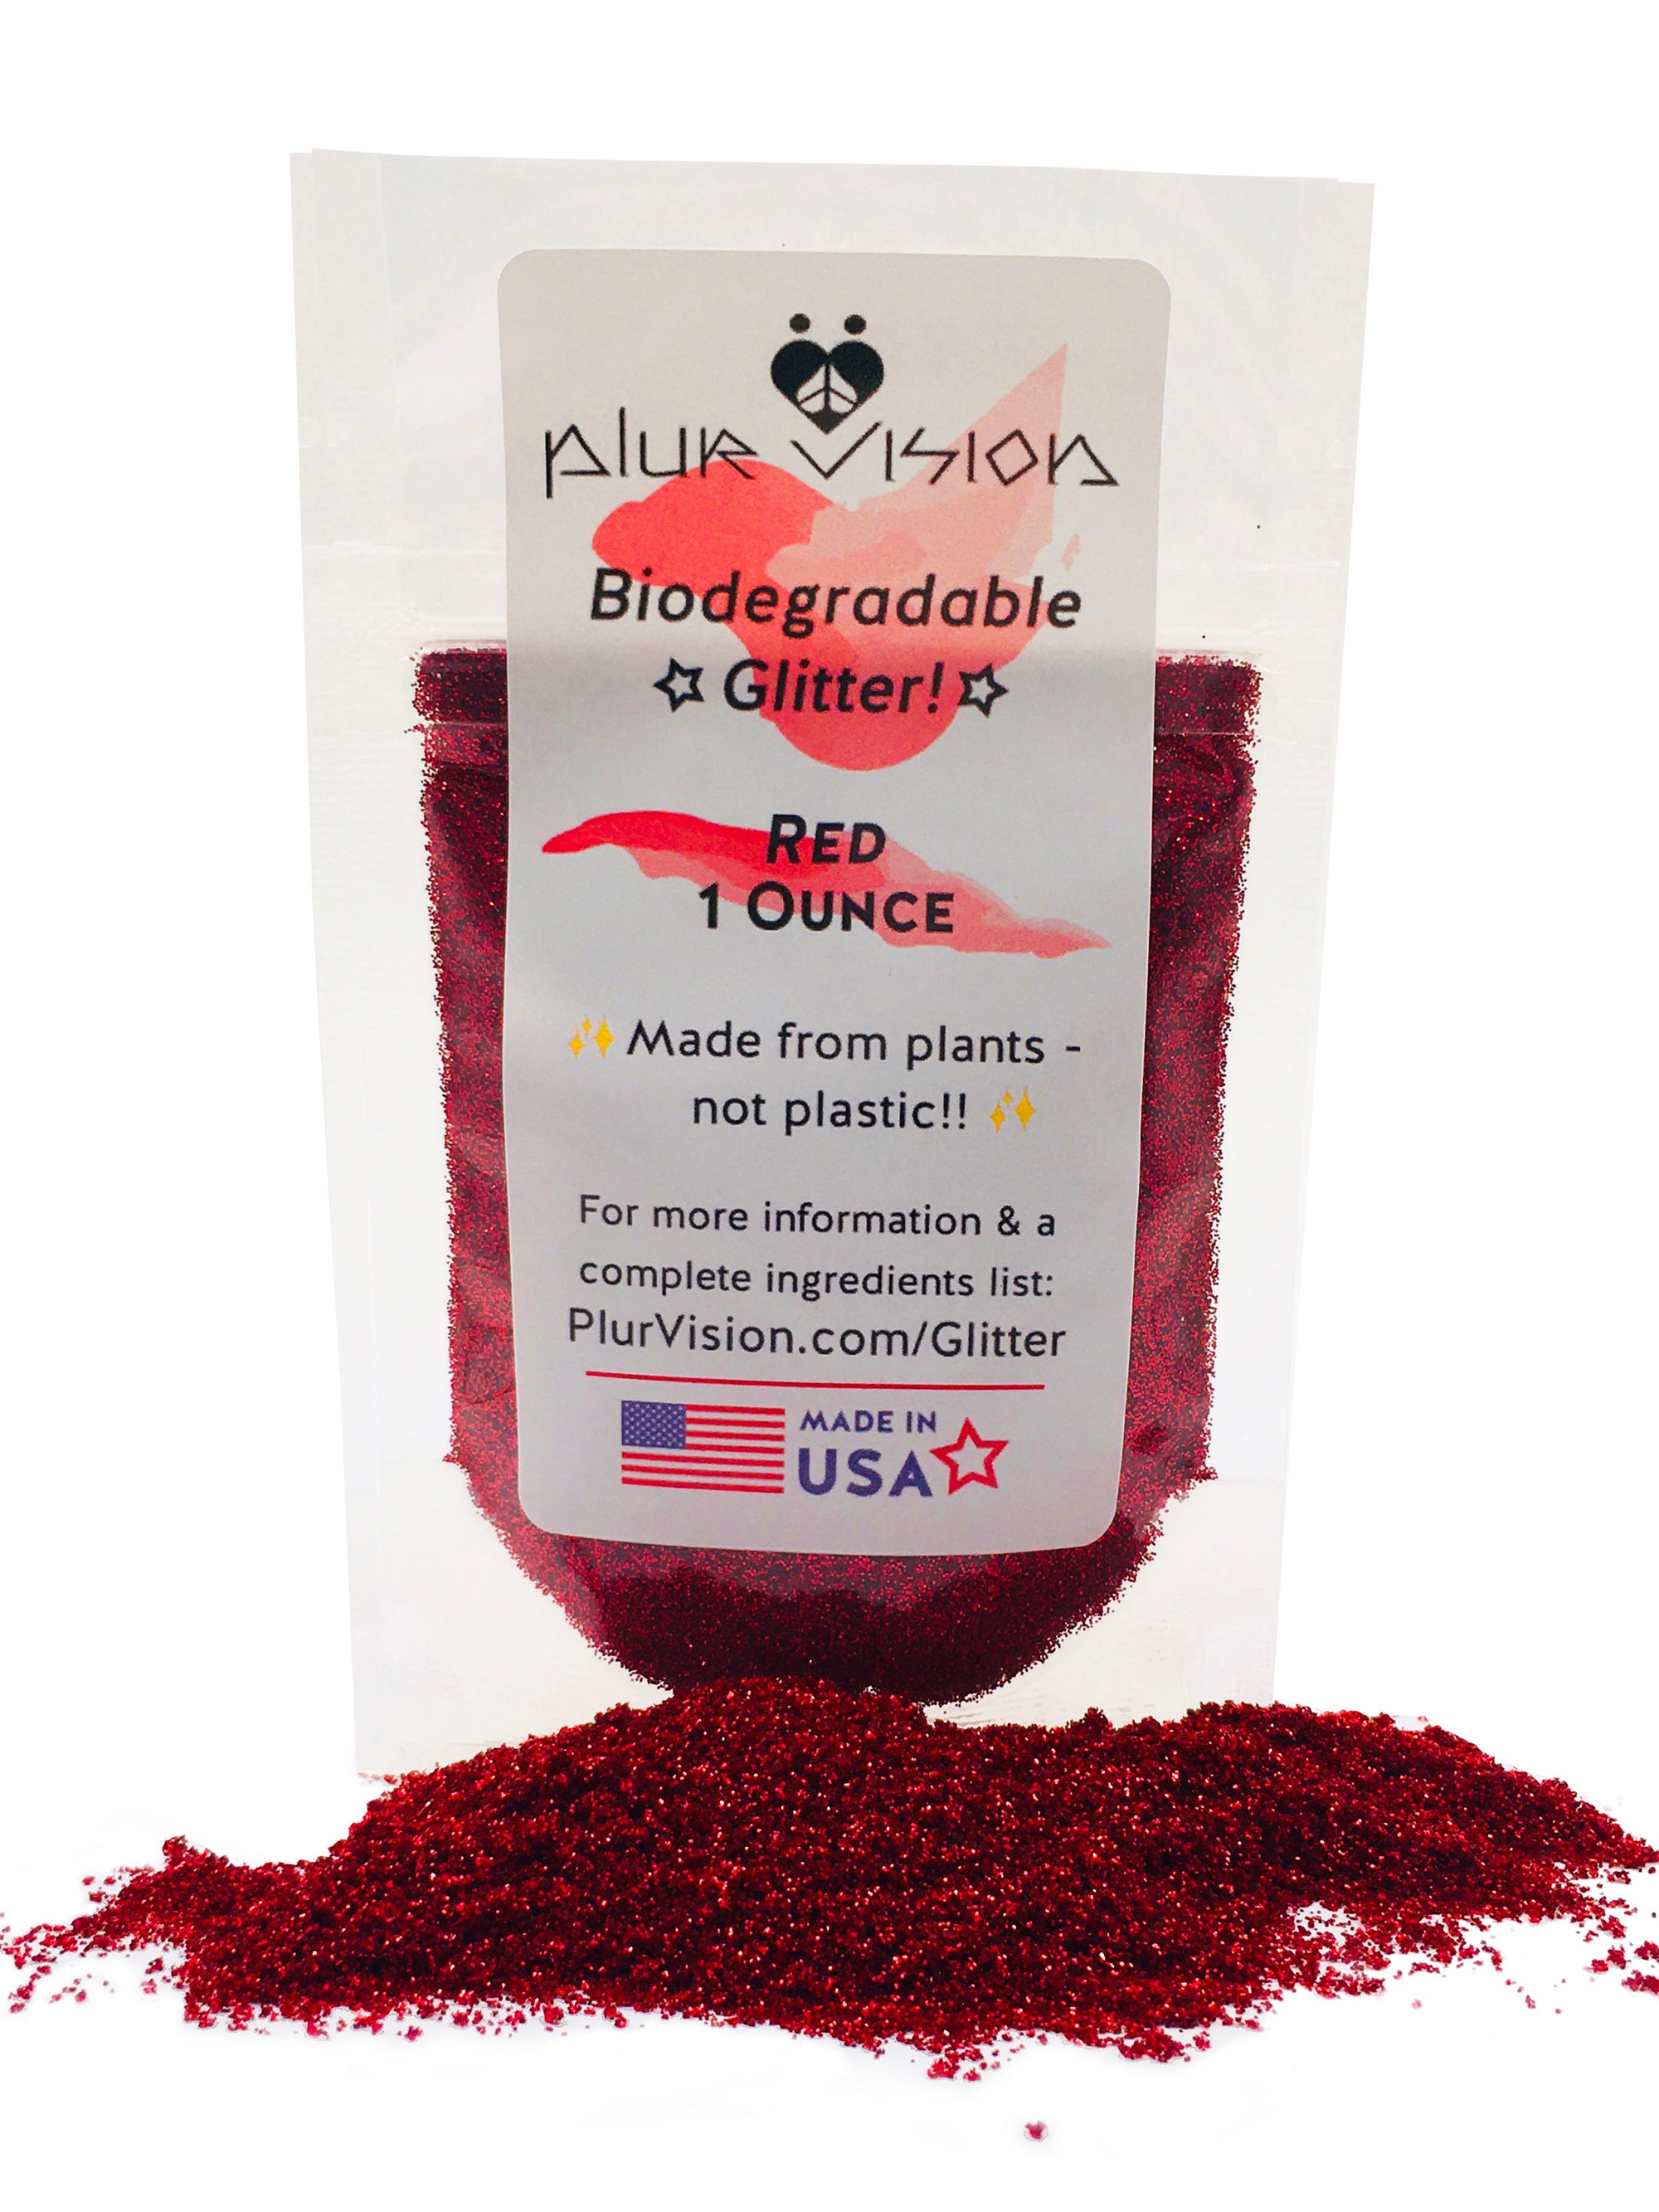 ✨ Red Biodegradable Glitter! ✨